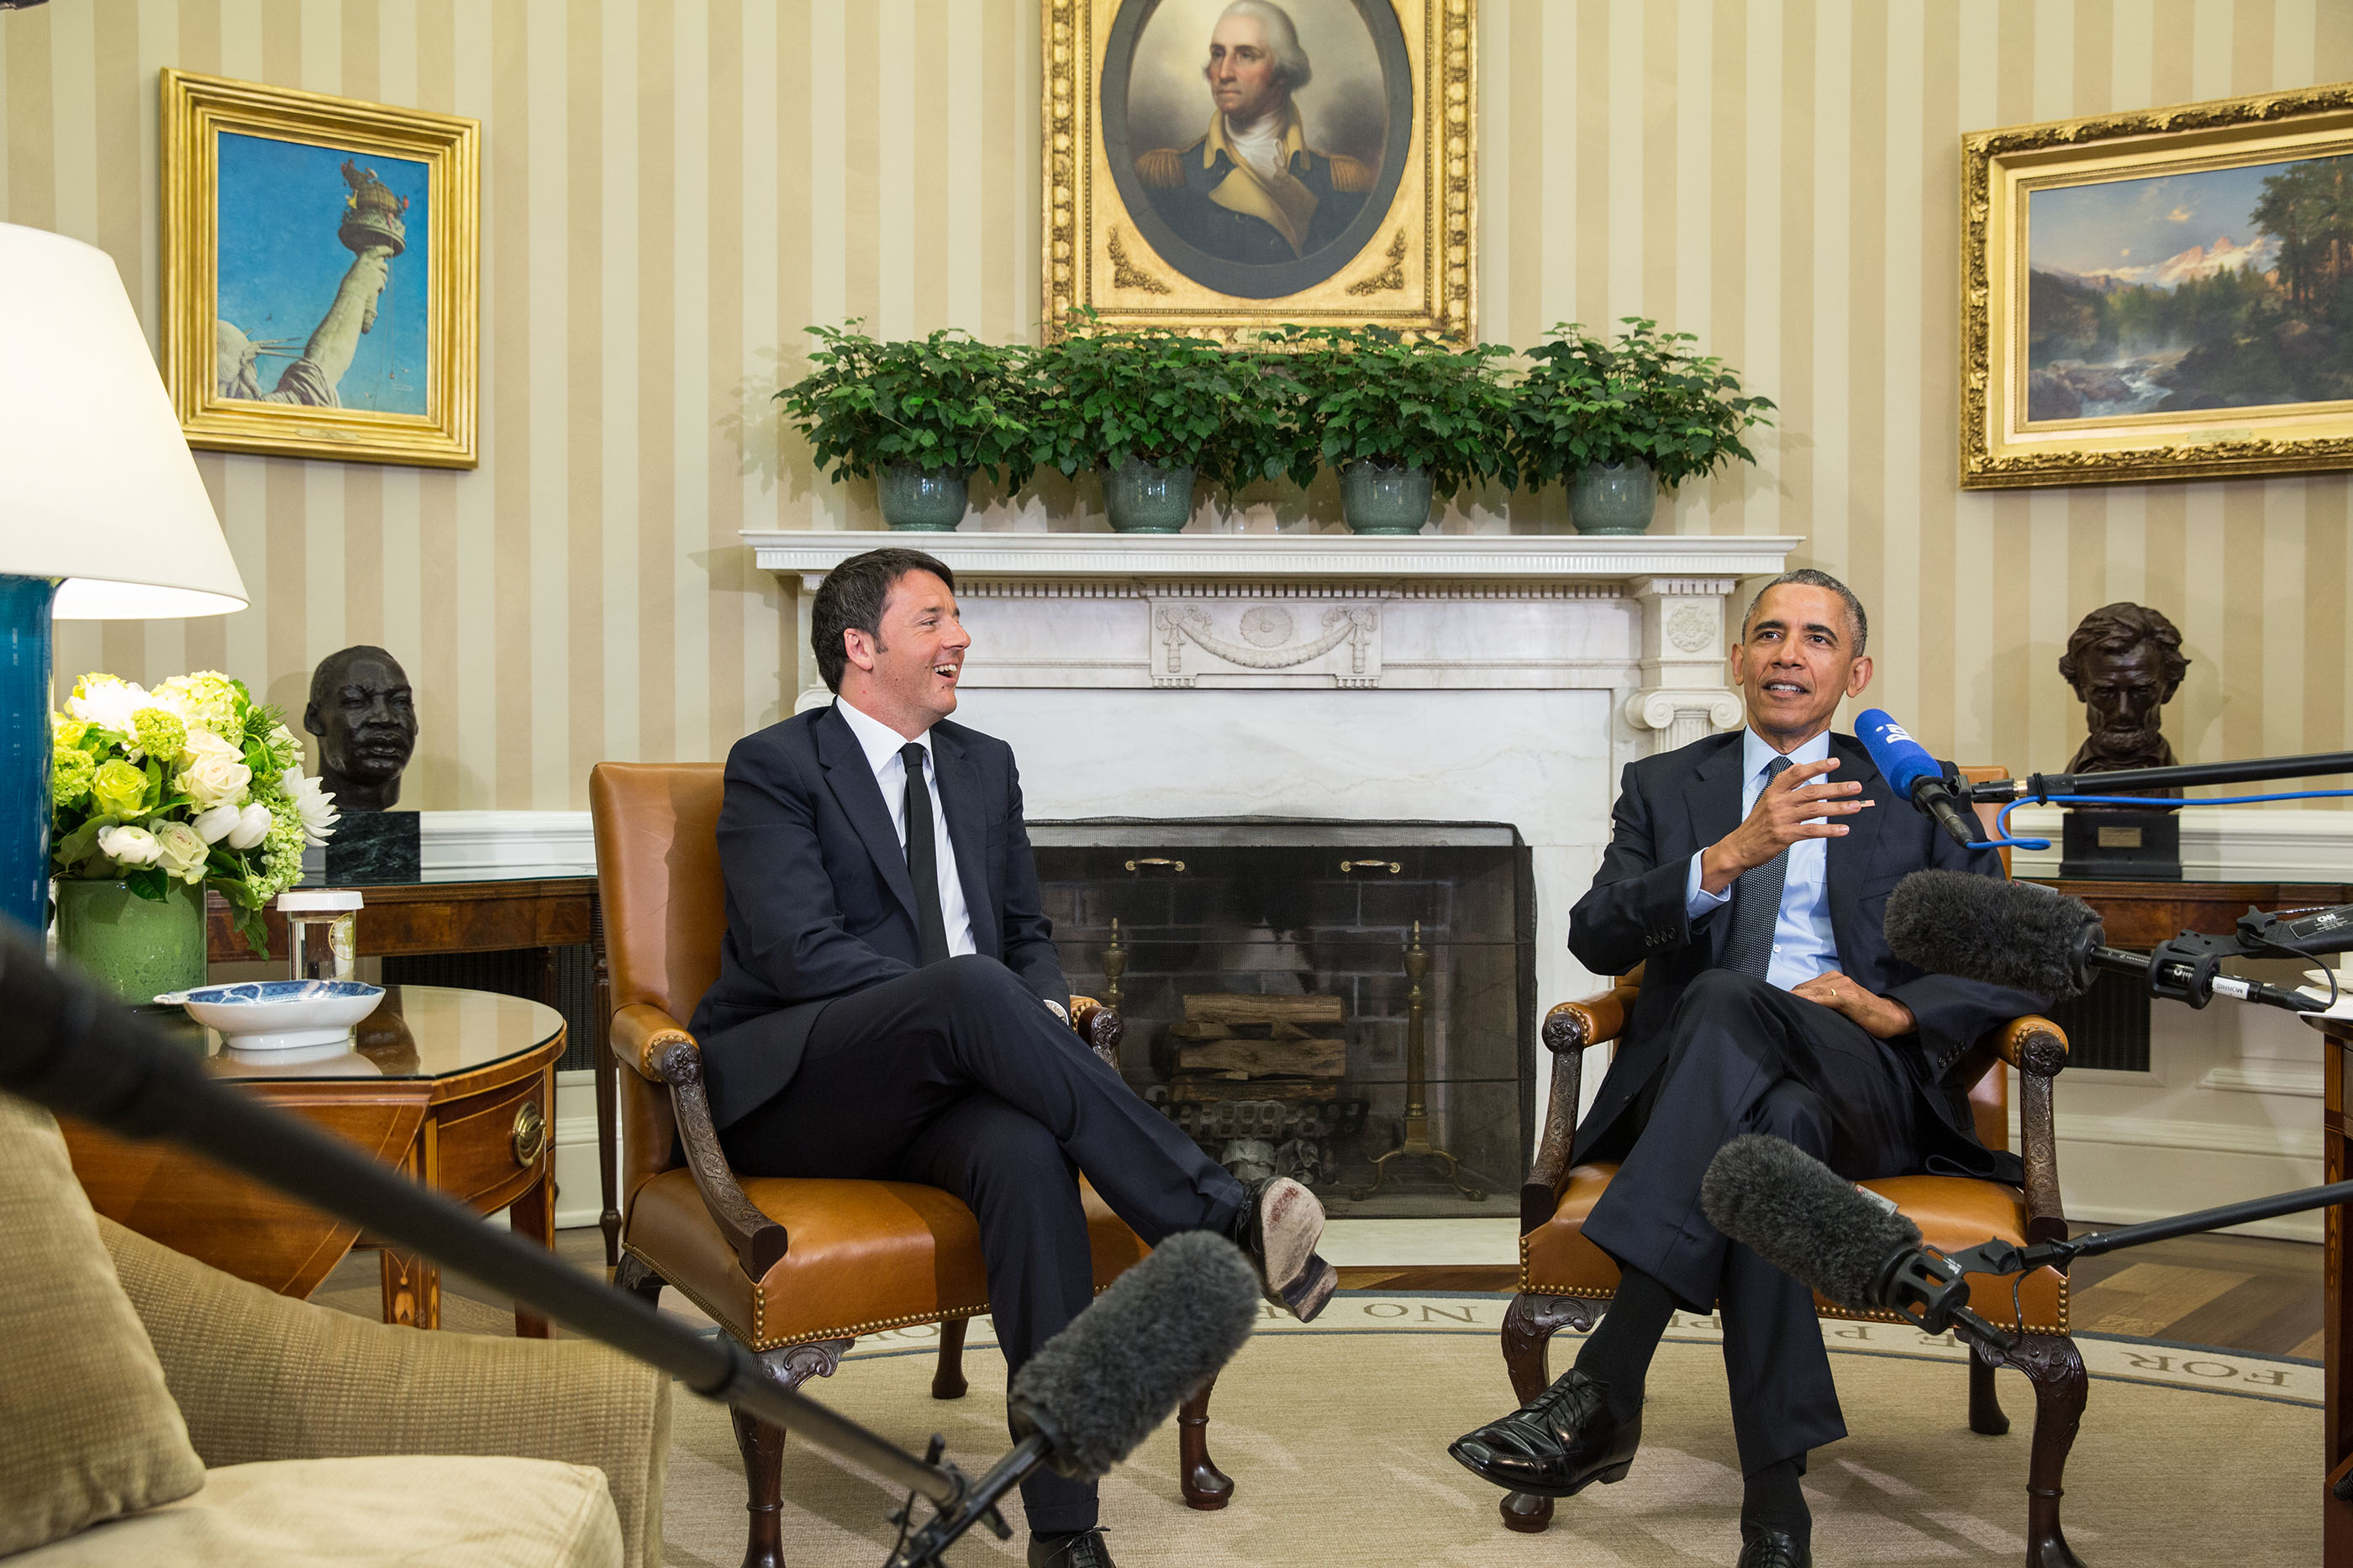 President Obama Welcomes Italian Prime Minister Renzi to the White House | whitehouse.gov